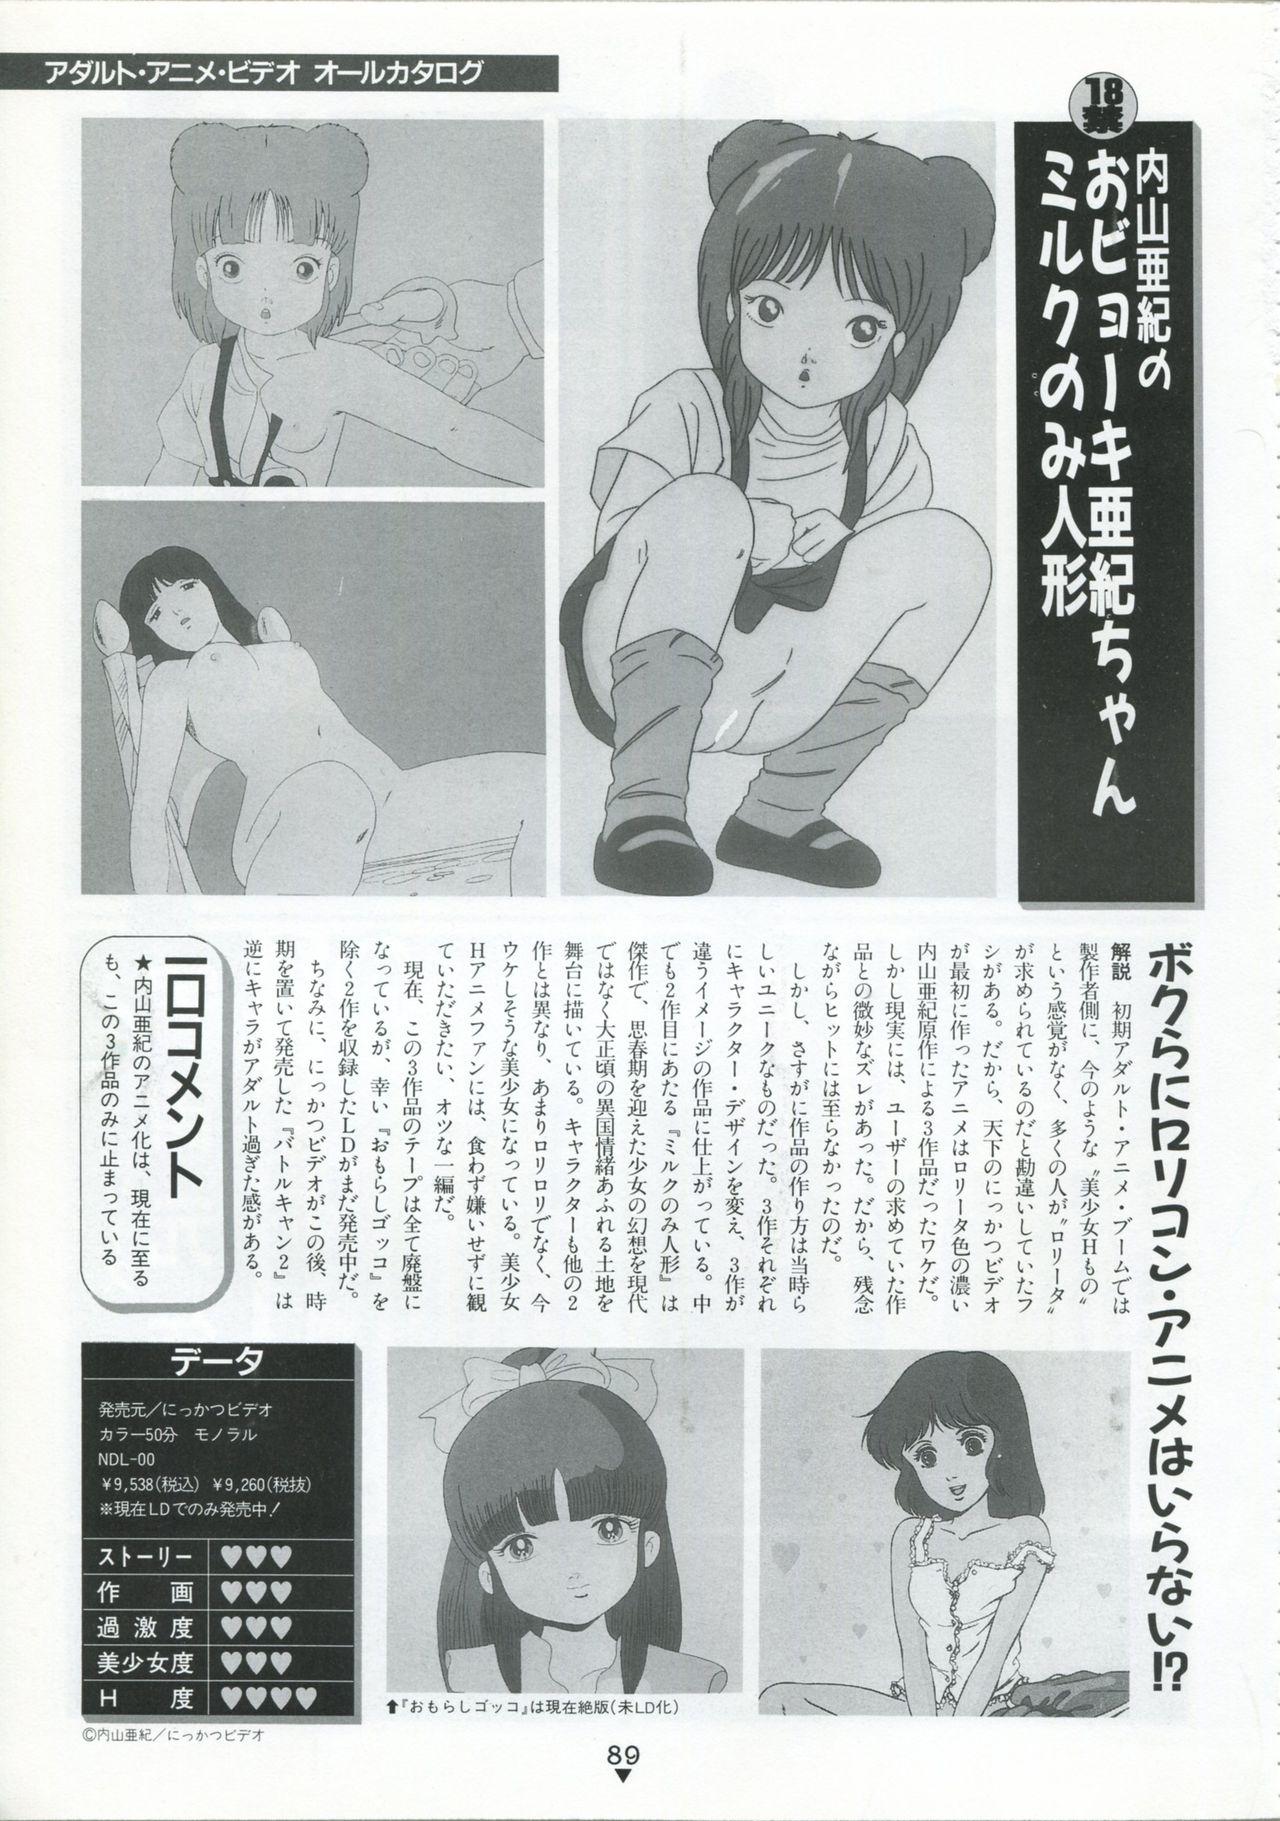 Bishoujo Anime Daizenshuu - Adult Animation Video Catalog 1991 84